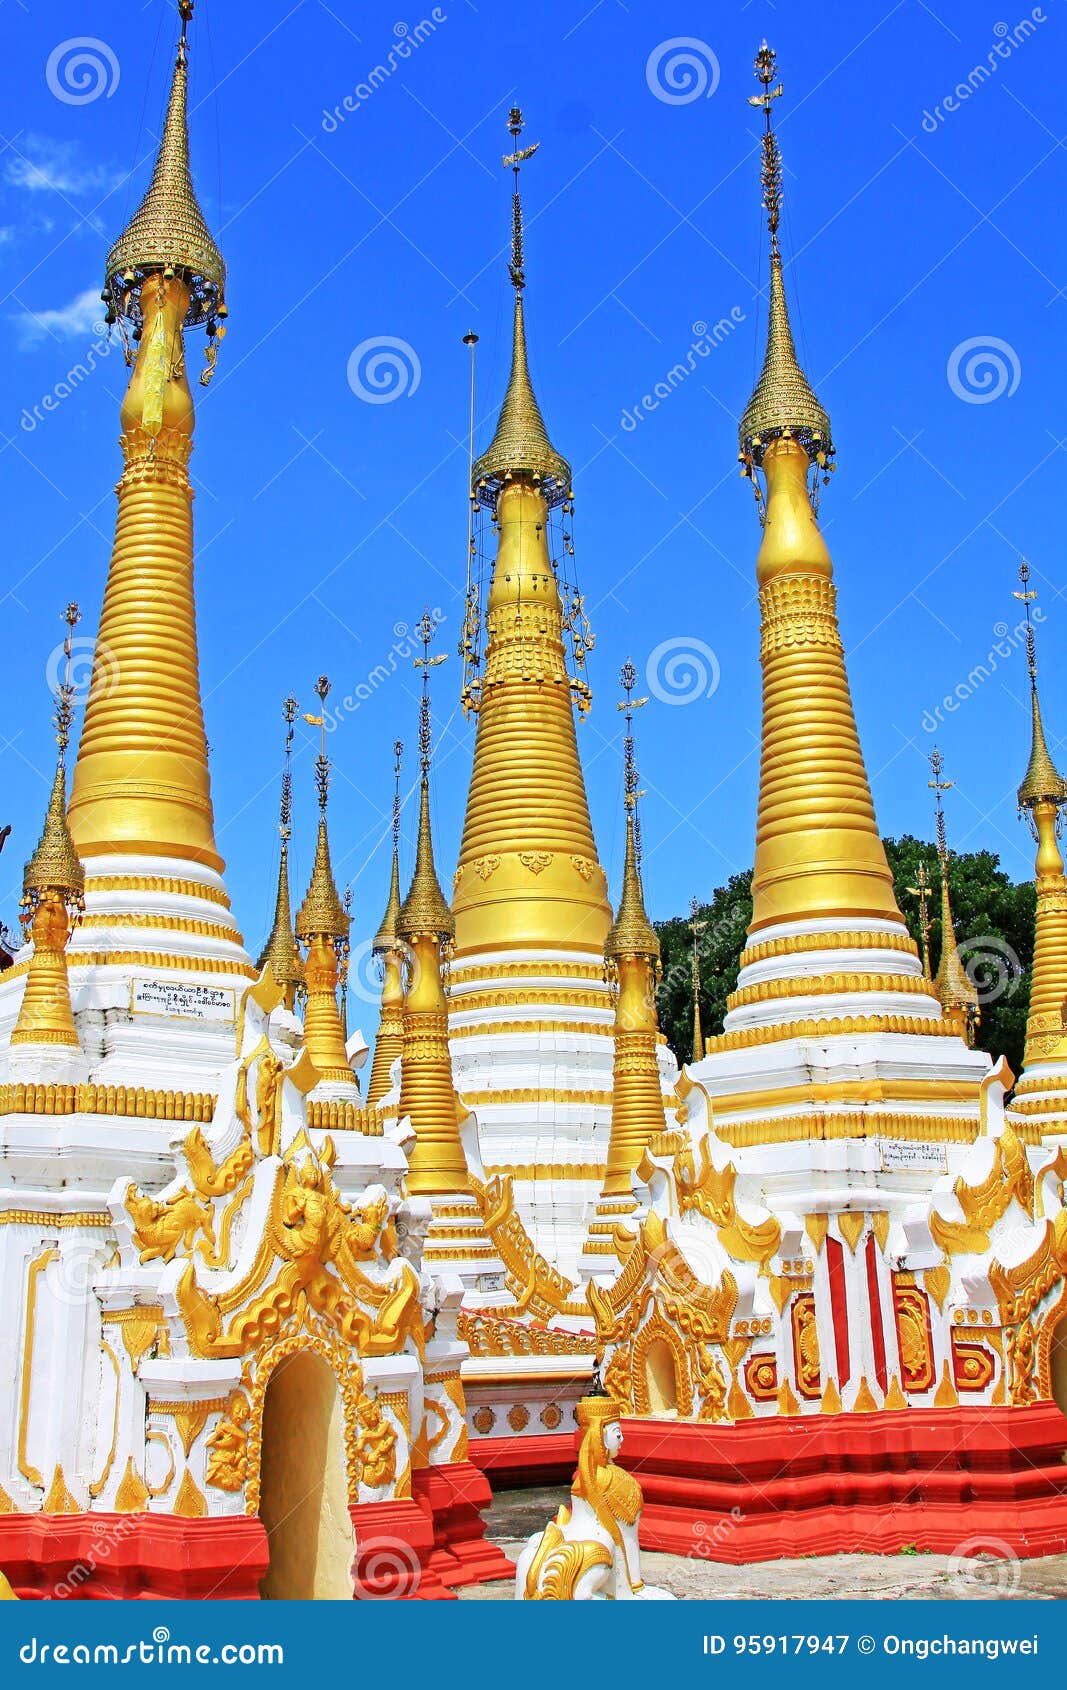 kyauk phyu gyi pagoda, nyaungshwe, myanmar